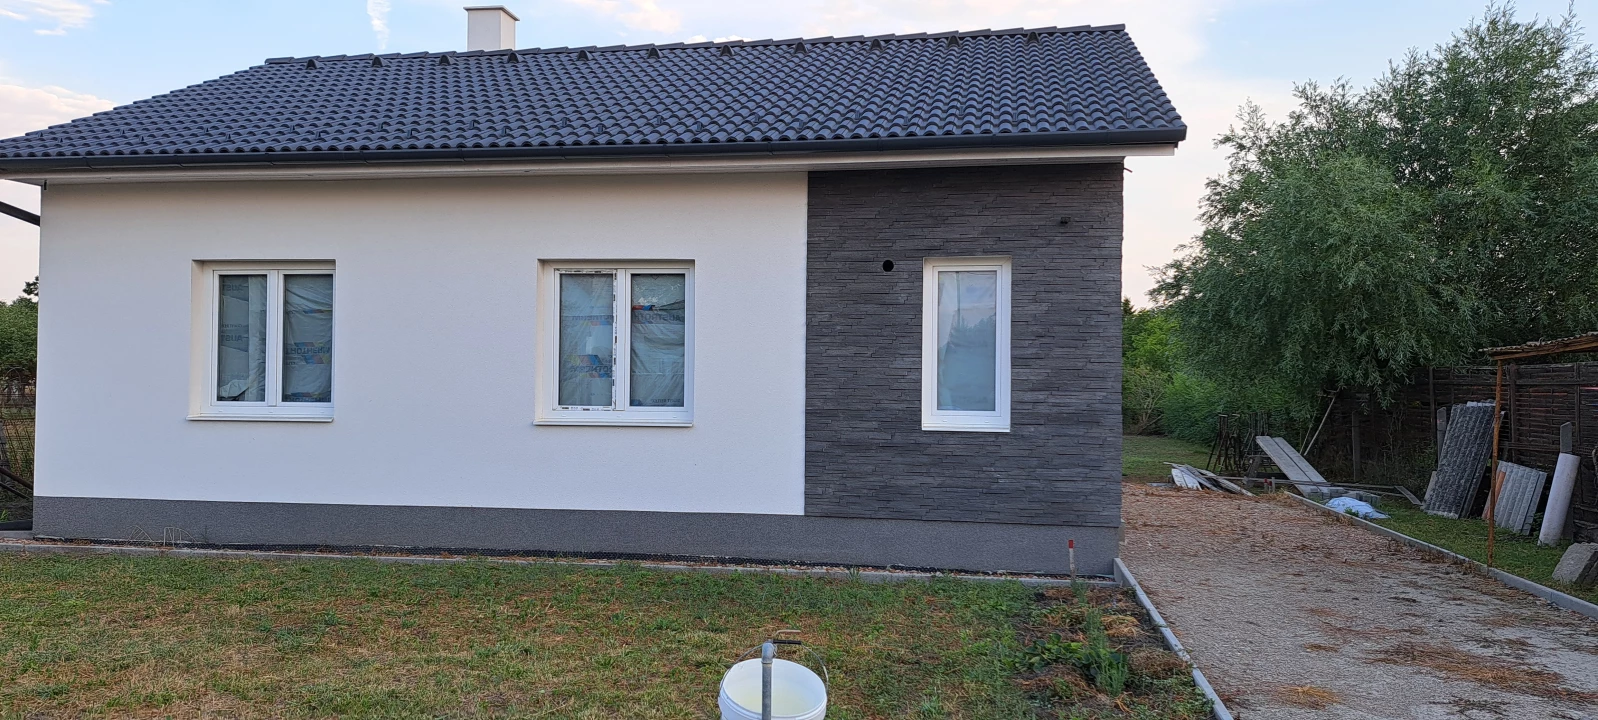 For sale house, Szeged